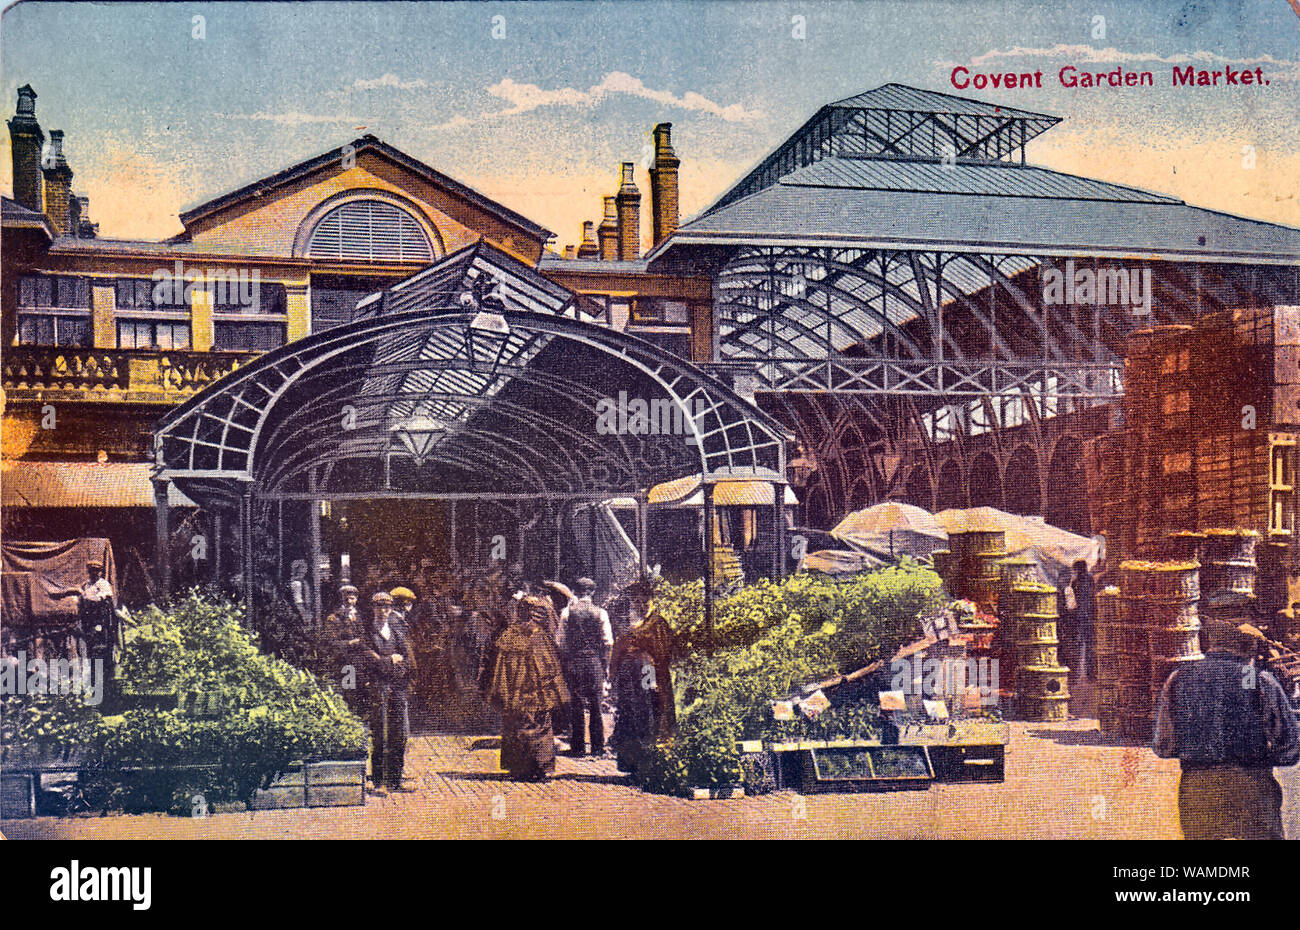 Mercato di Covent Garden. Mercato di Covent Garden in cartolina vintage dal giro del xx secolo Foto Stock